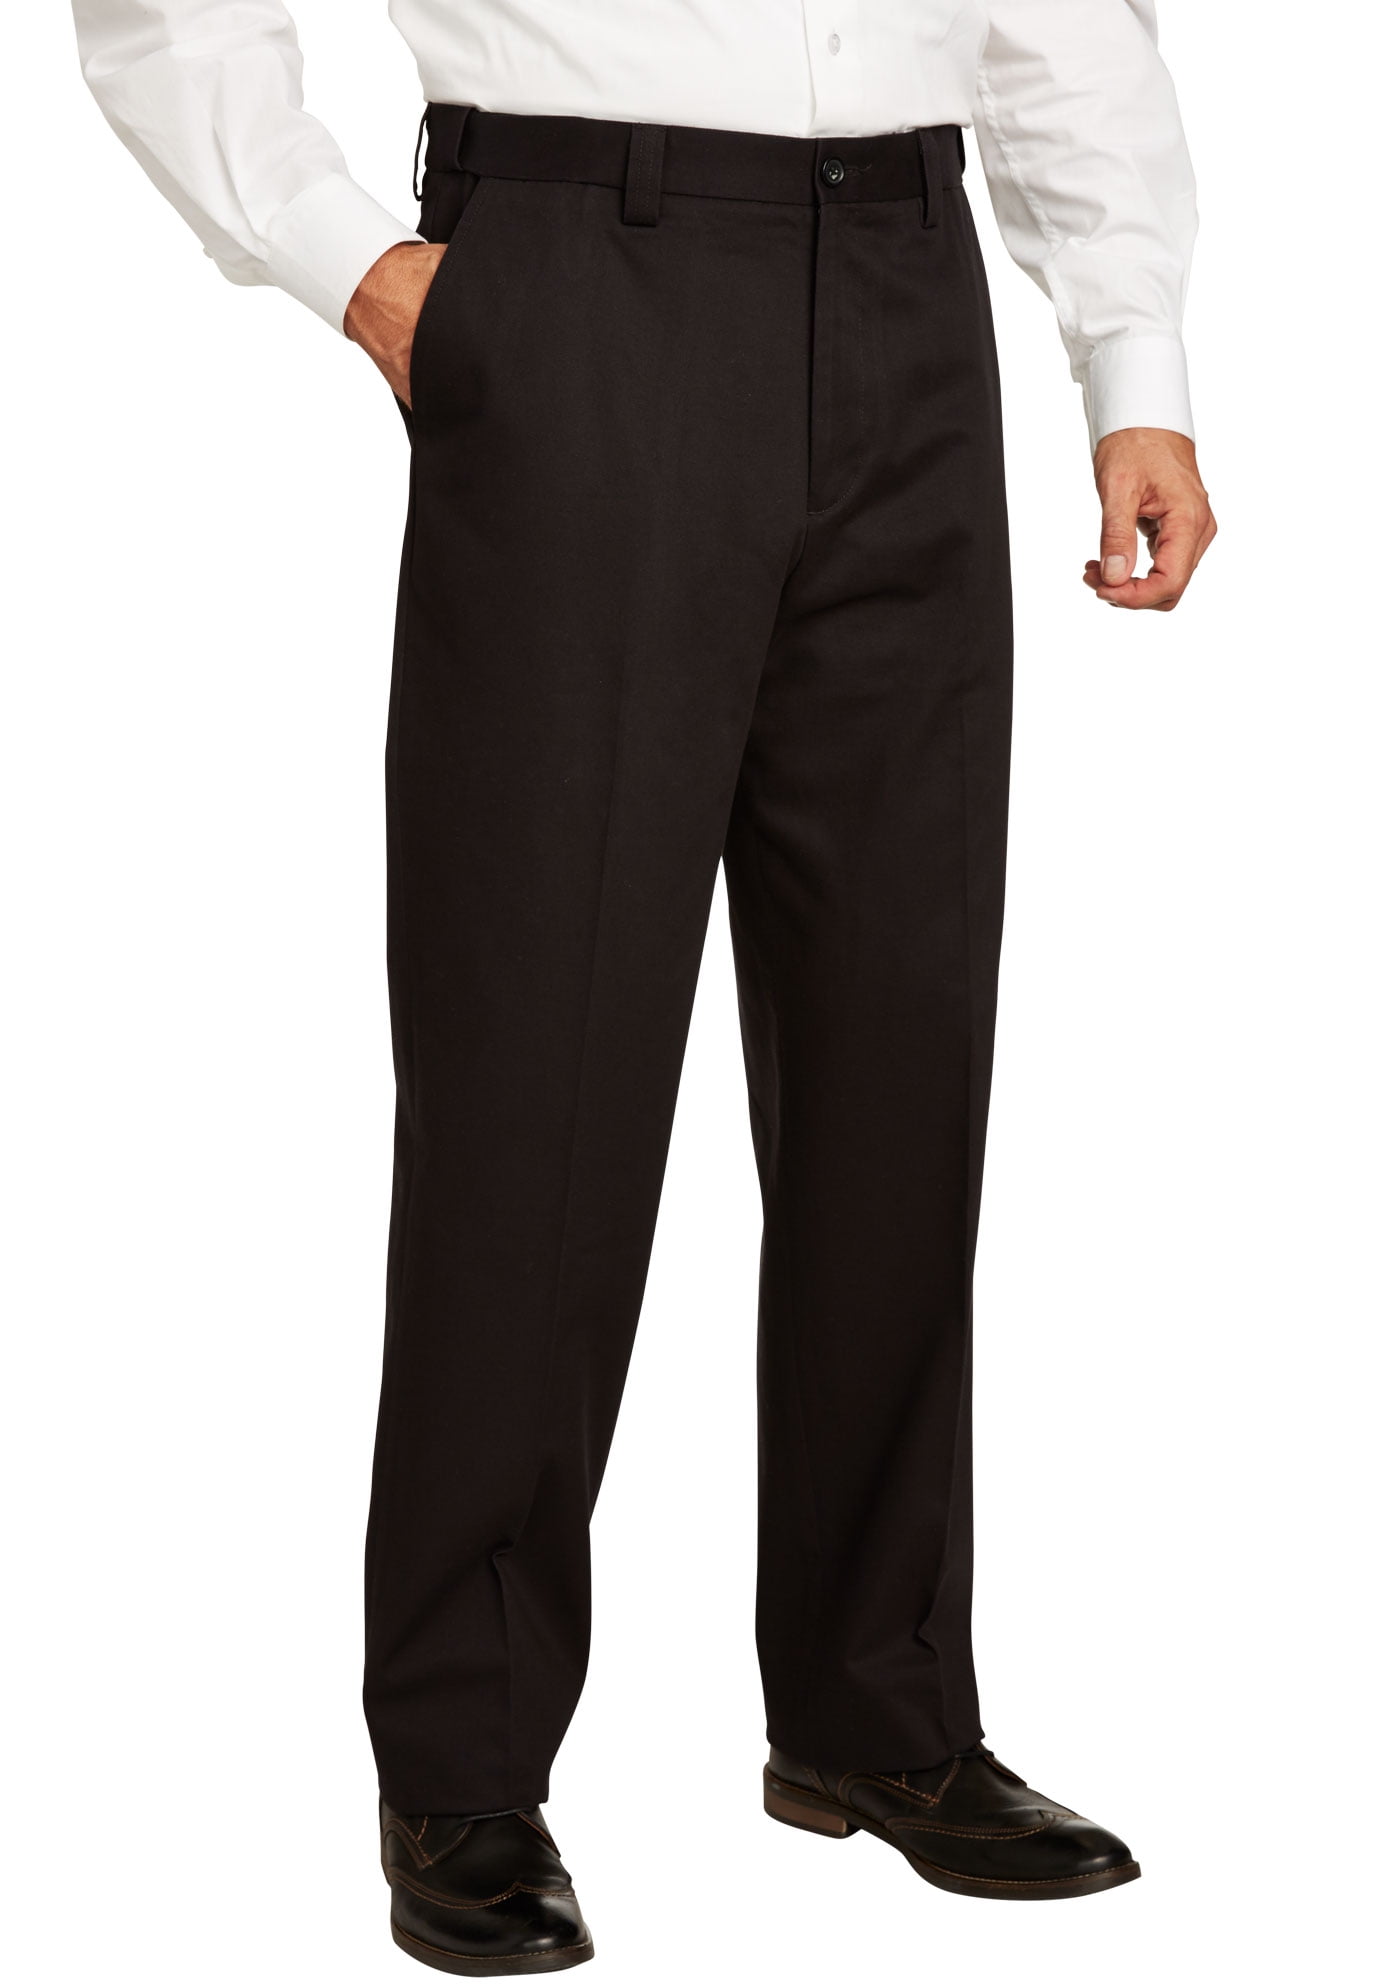 Buy Aswad Men's Wrinkle Free Pants for Men | Self Design Formal Regular Fit  Trousers (28, Cream) at Amazon.in